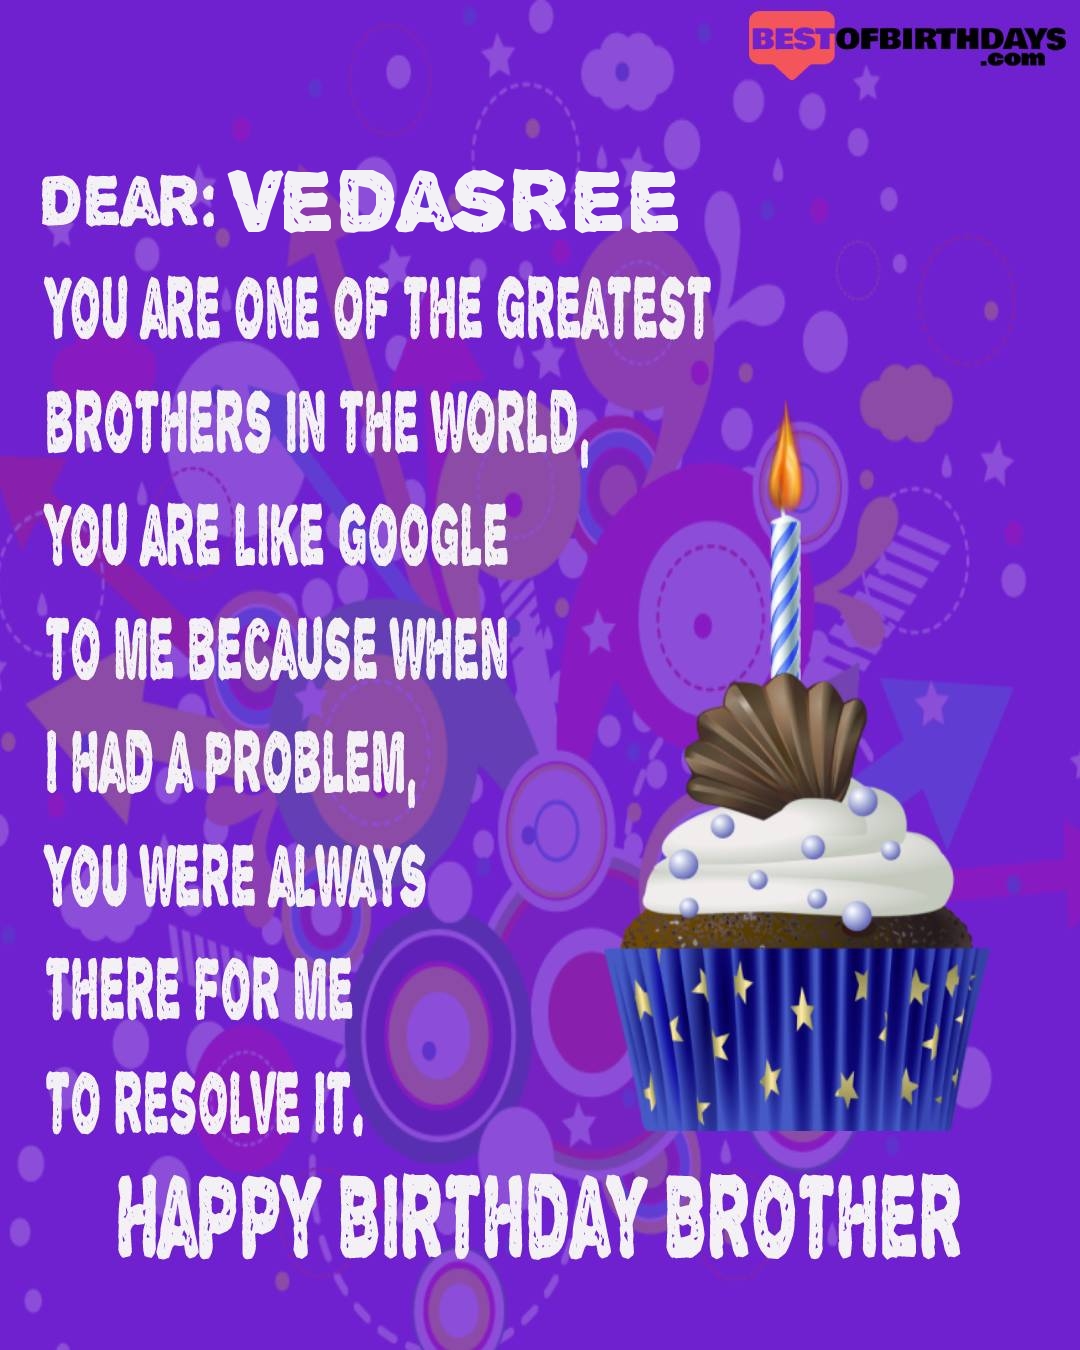 Happy birthday vedasree bhai brother bro